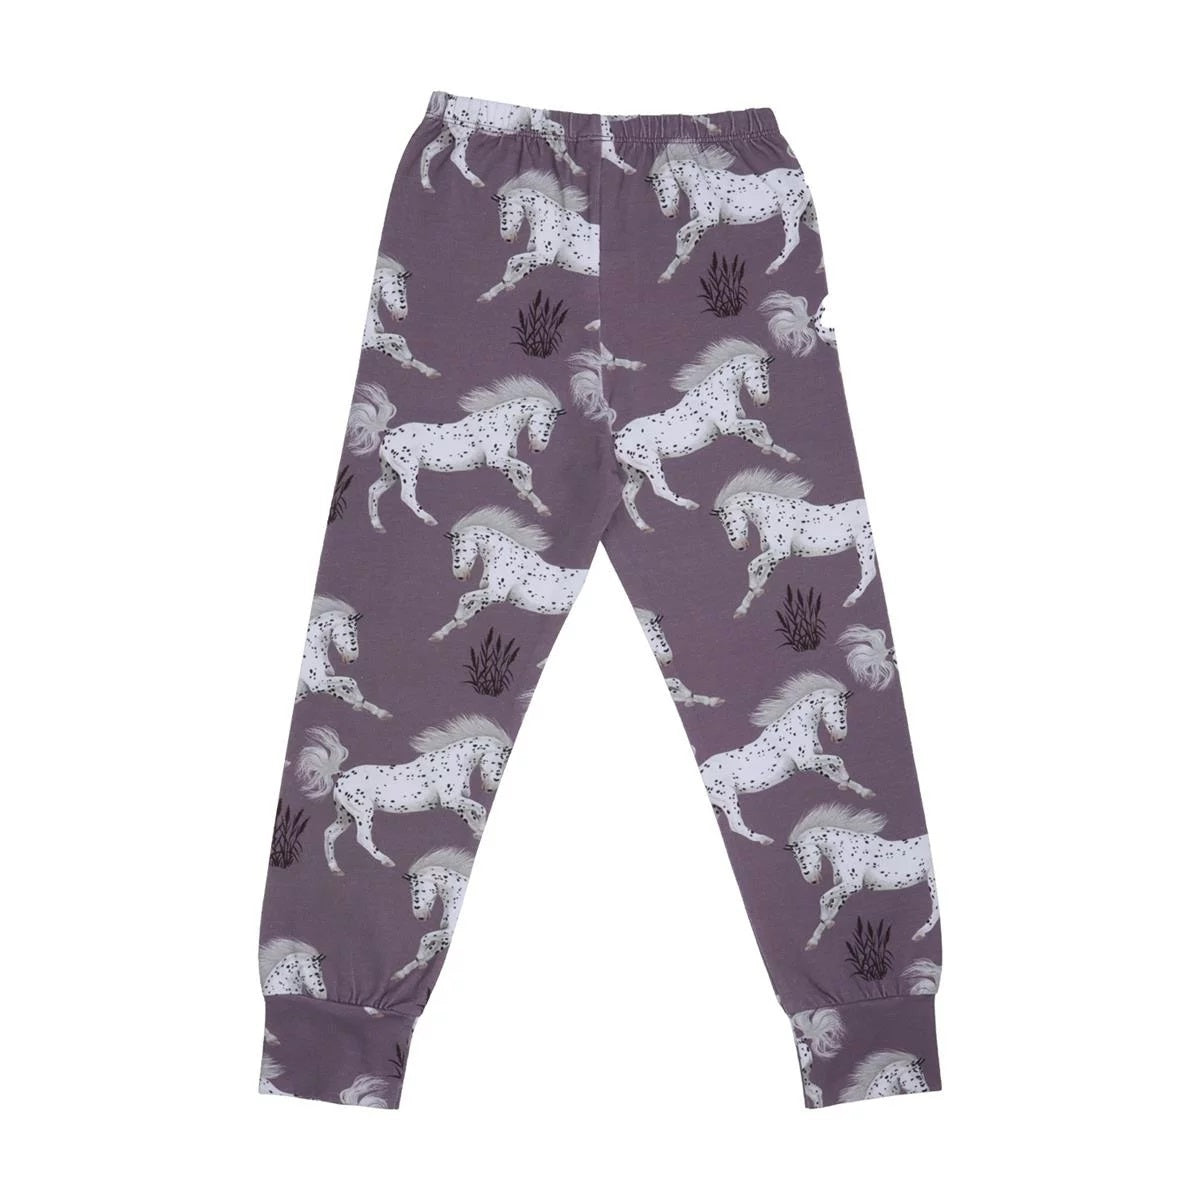 Walkiddy - Schimmel Horses Jersey Pajamas LS